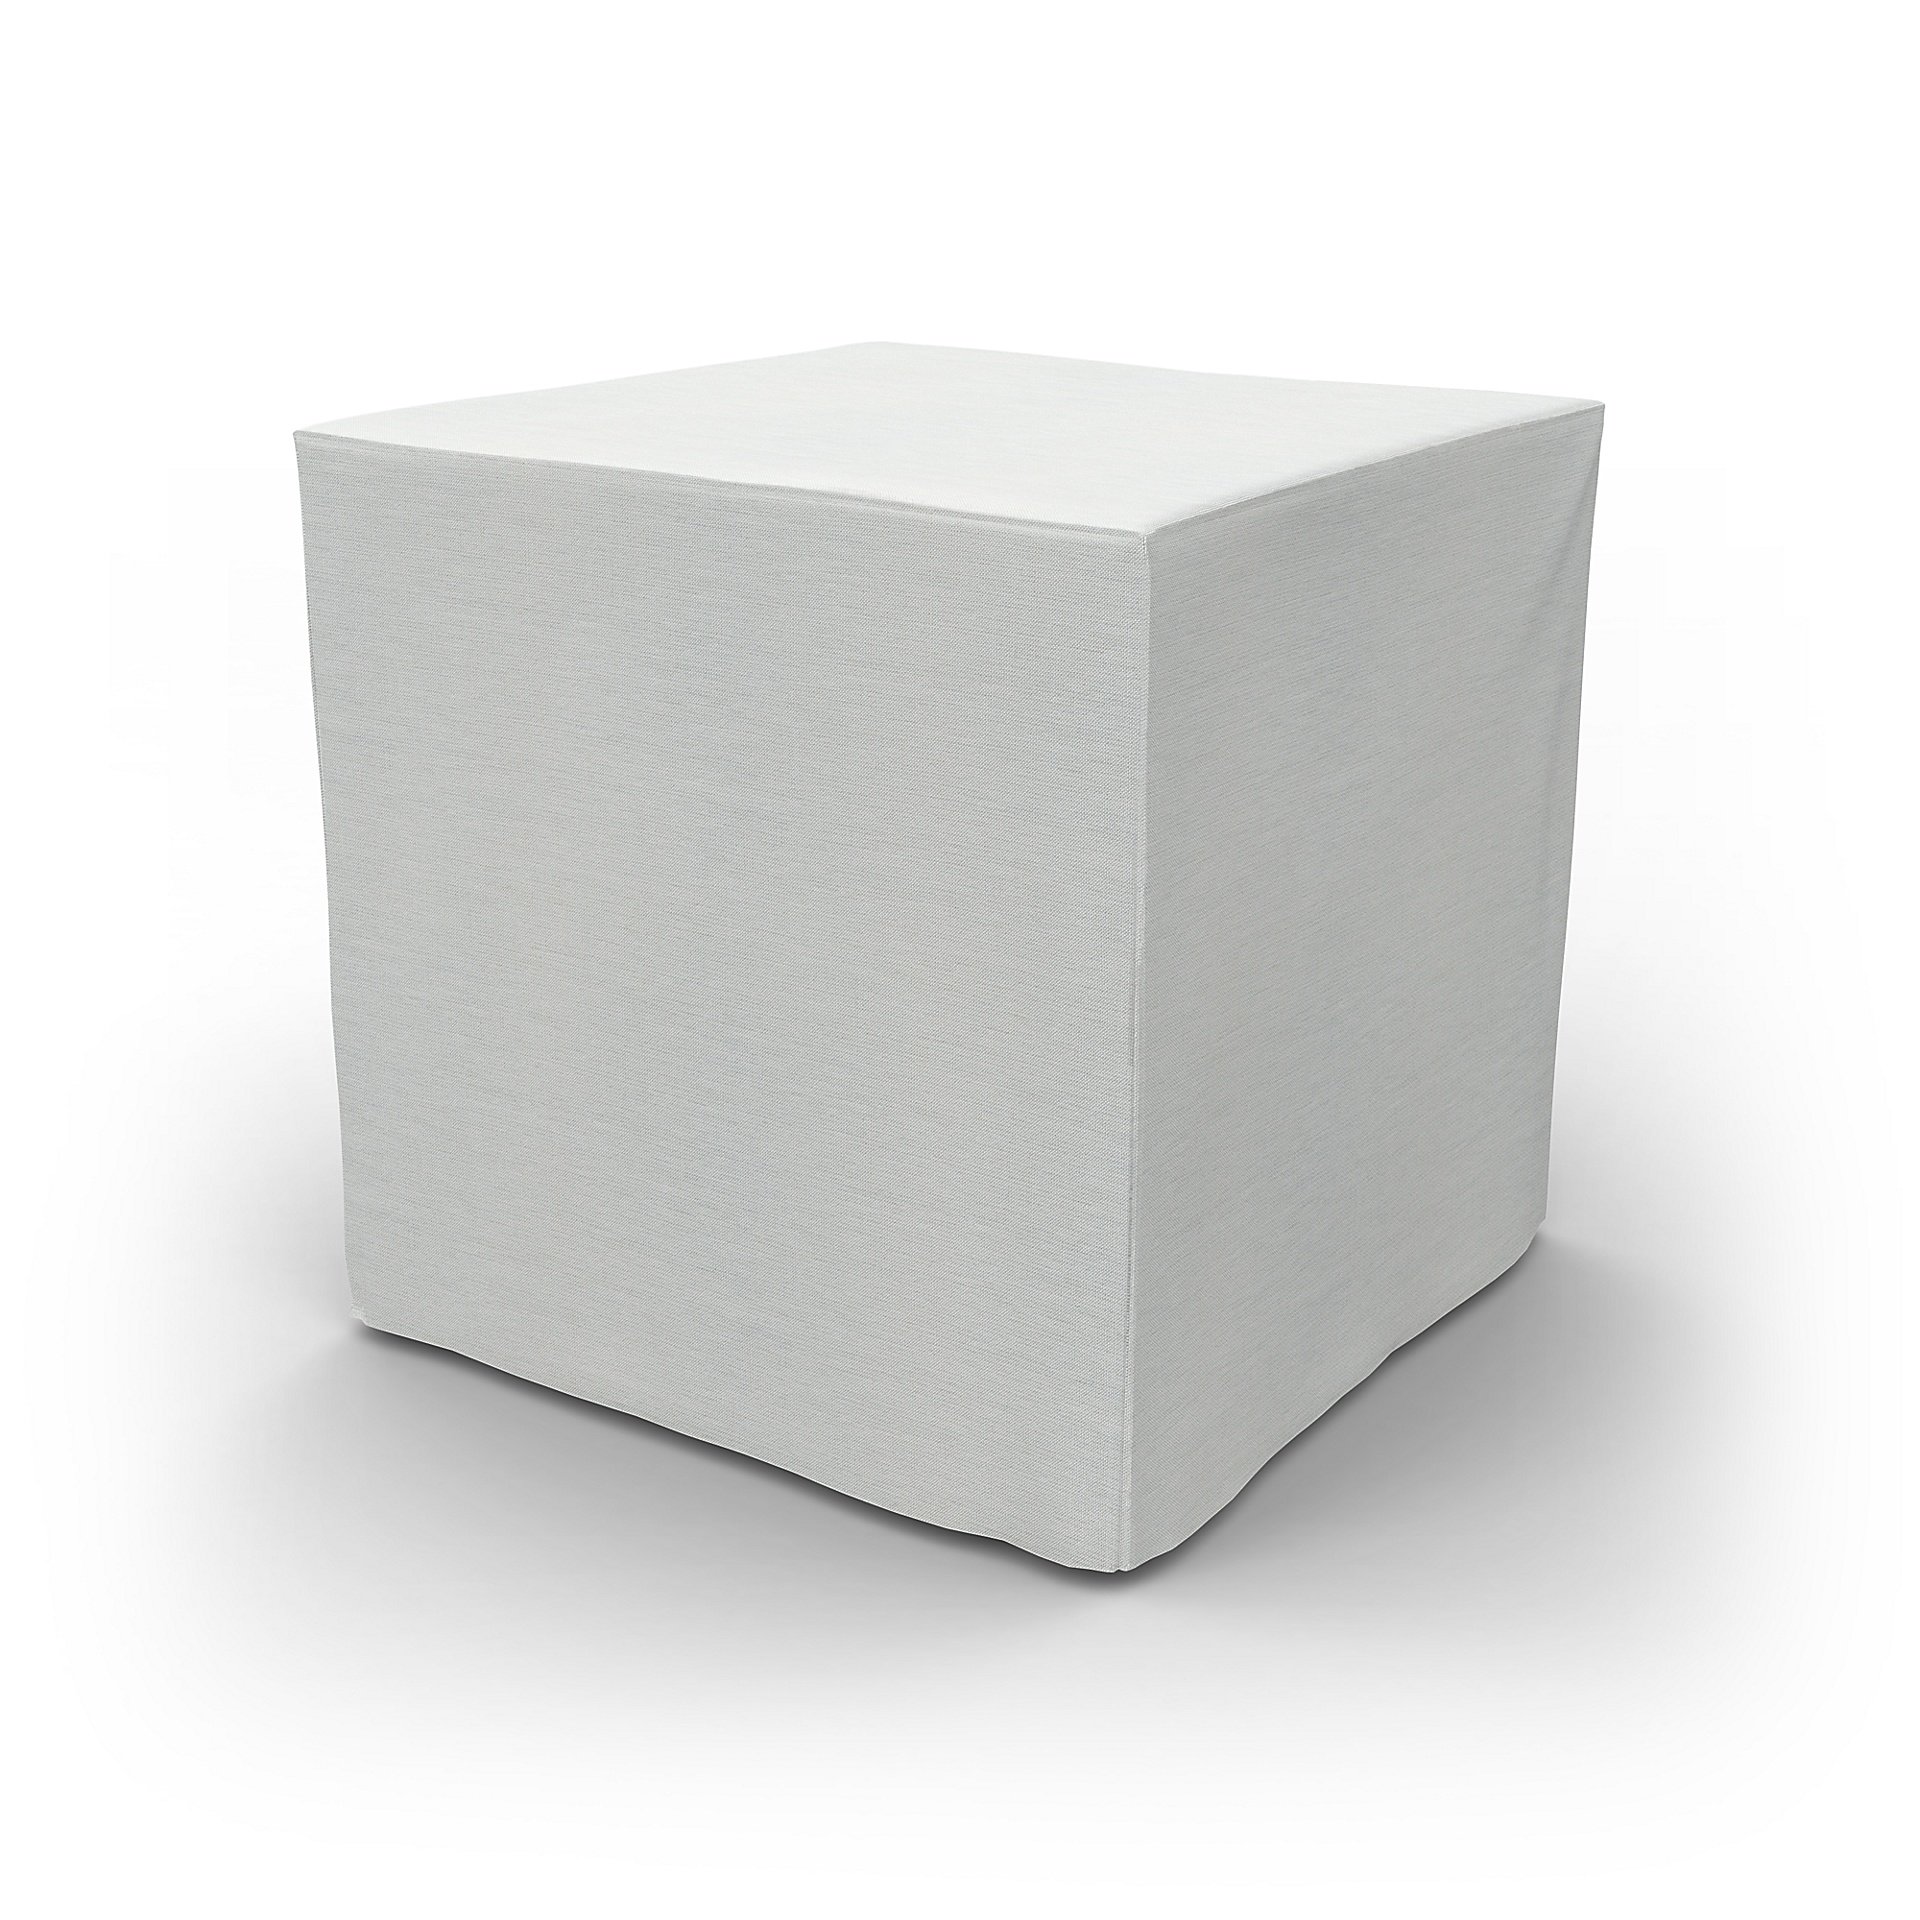 IKEA - Pallbo Footstool Cover, White, Linen - Bemz